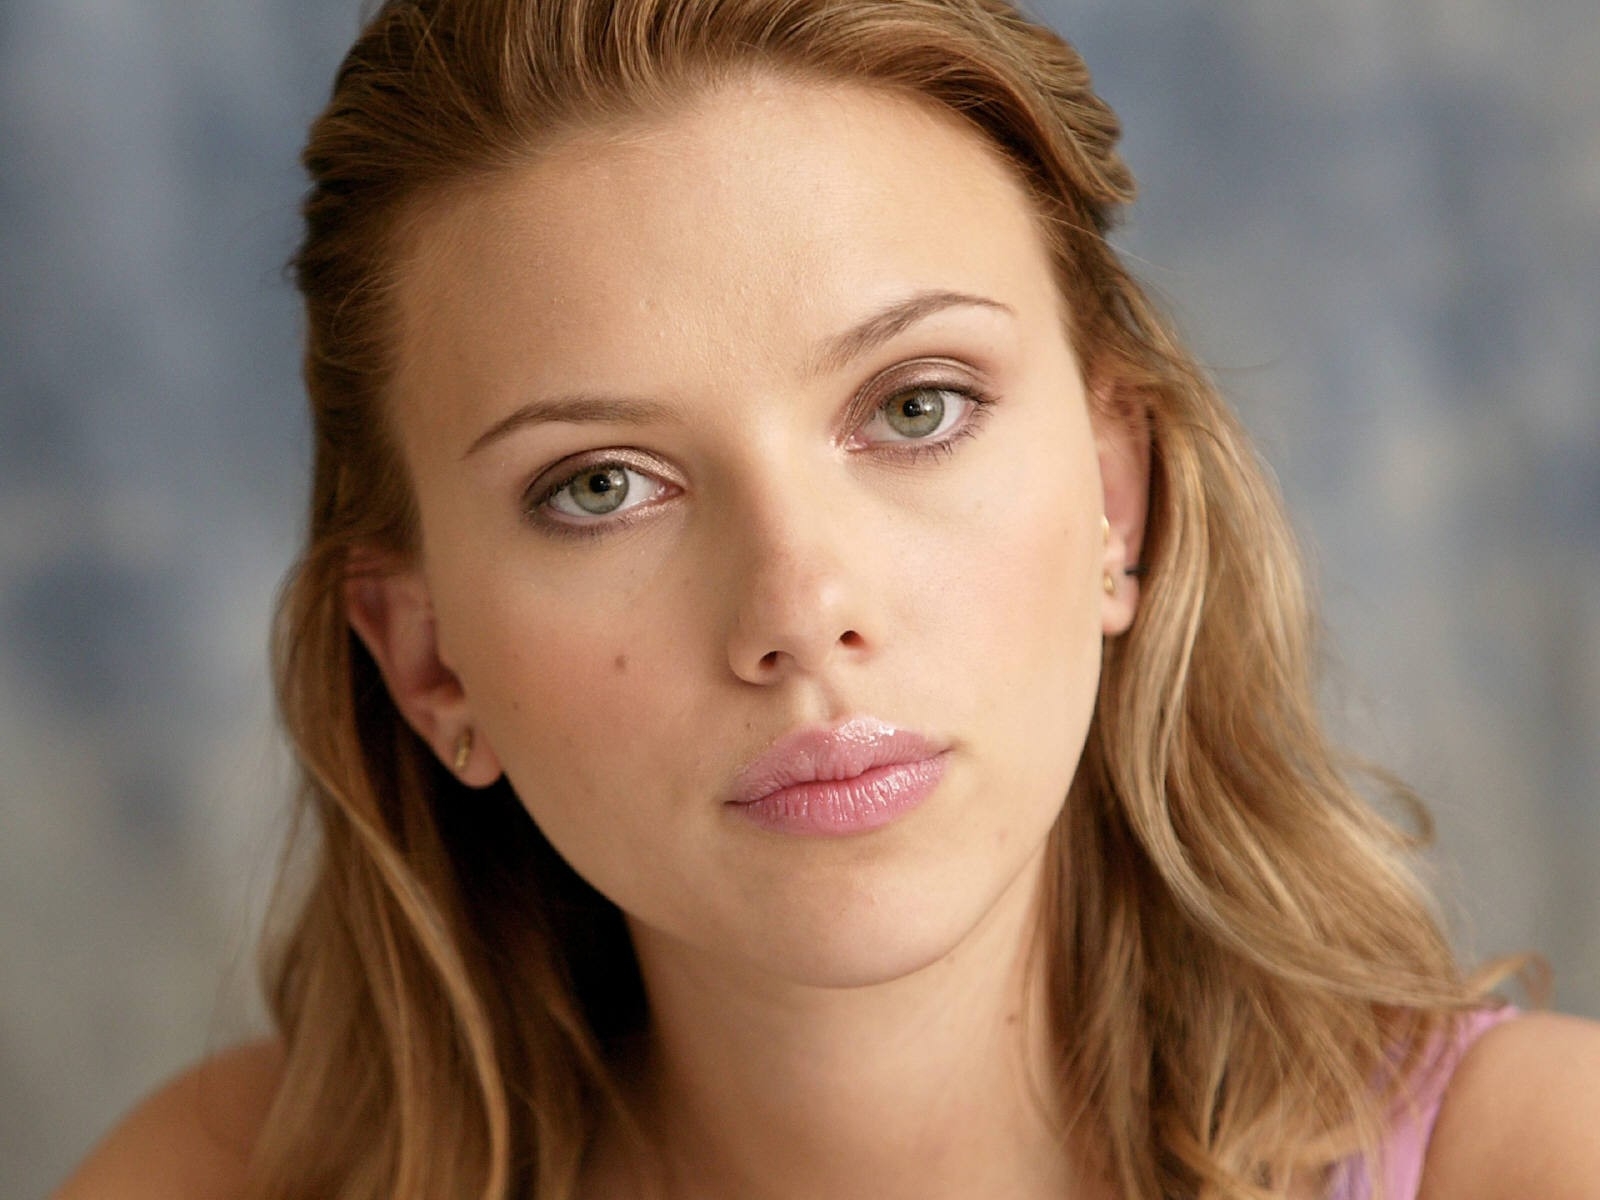 Pictures Of Scarlett Johansson.